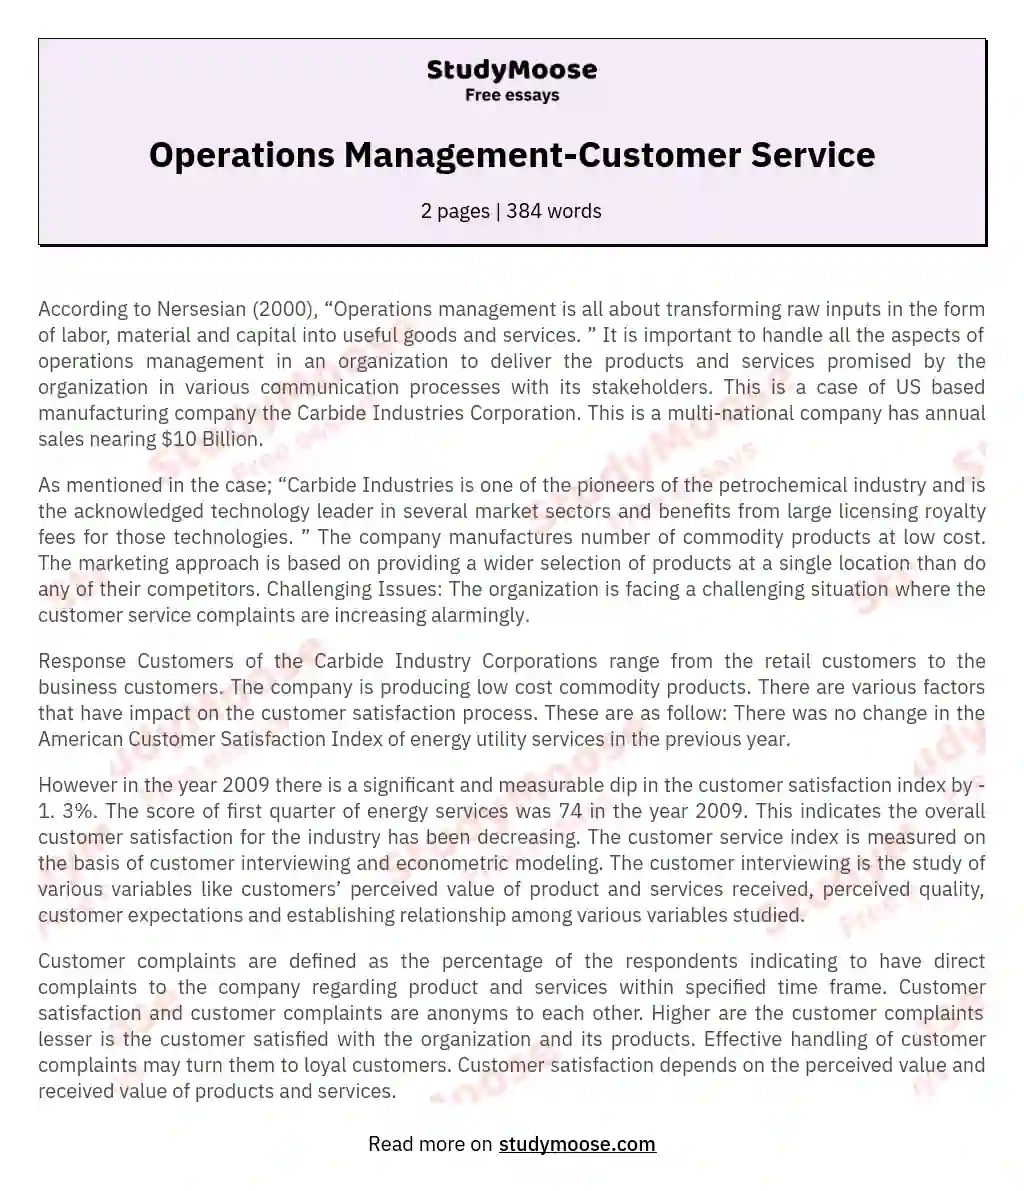 Operations Management-Customer Service essay